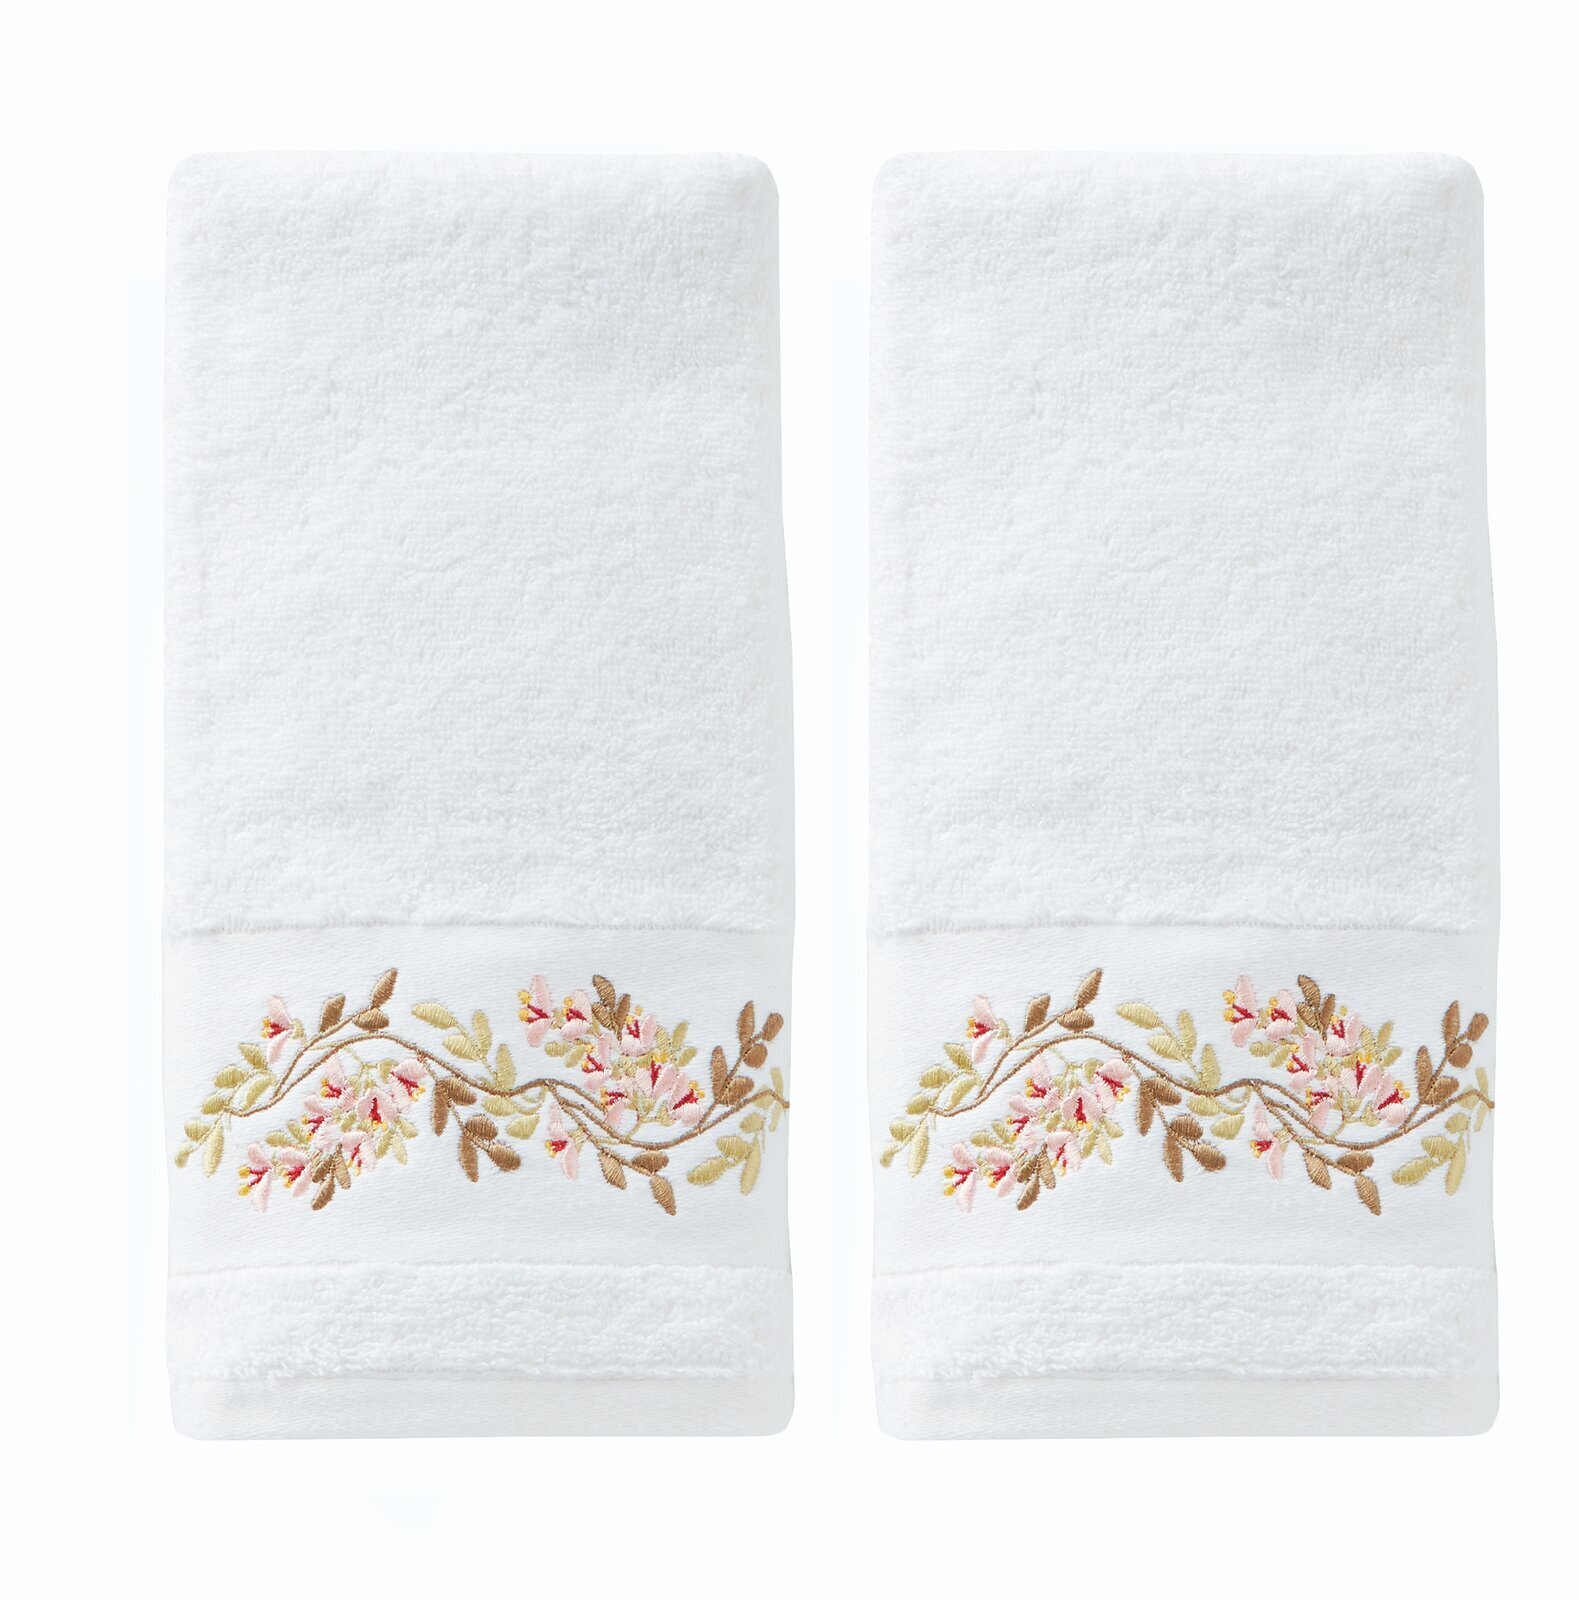 Elegant and Mature Flower Hand Towels